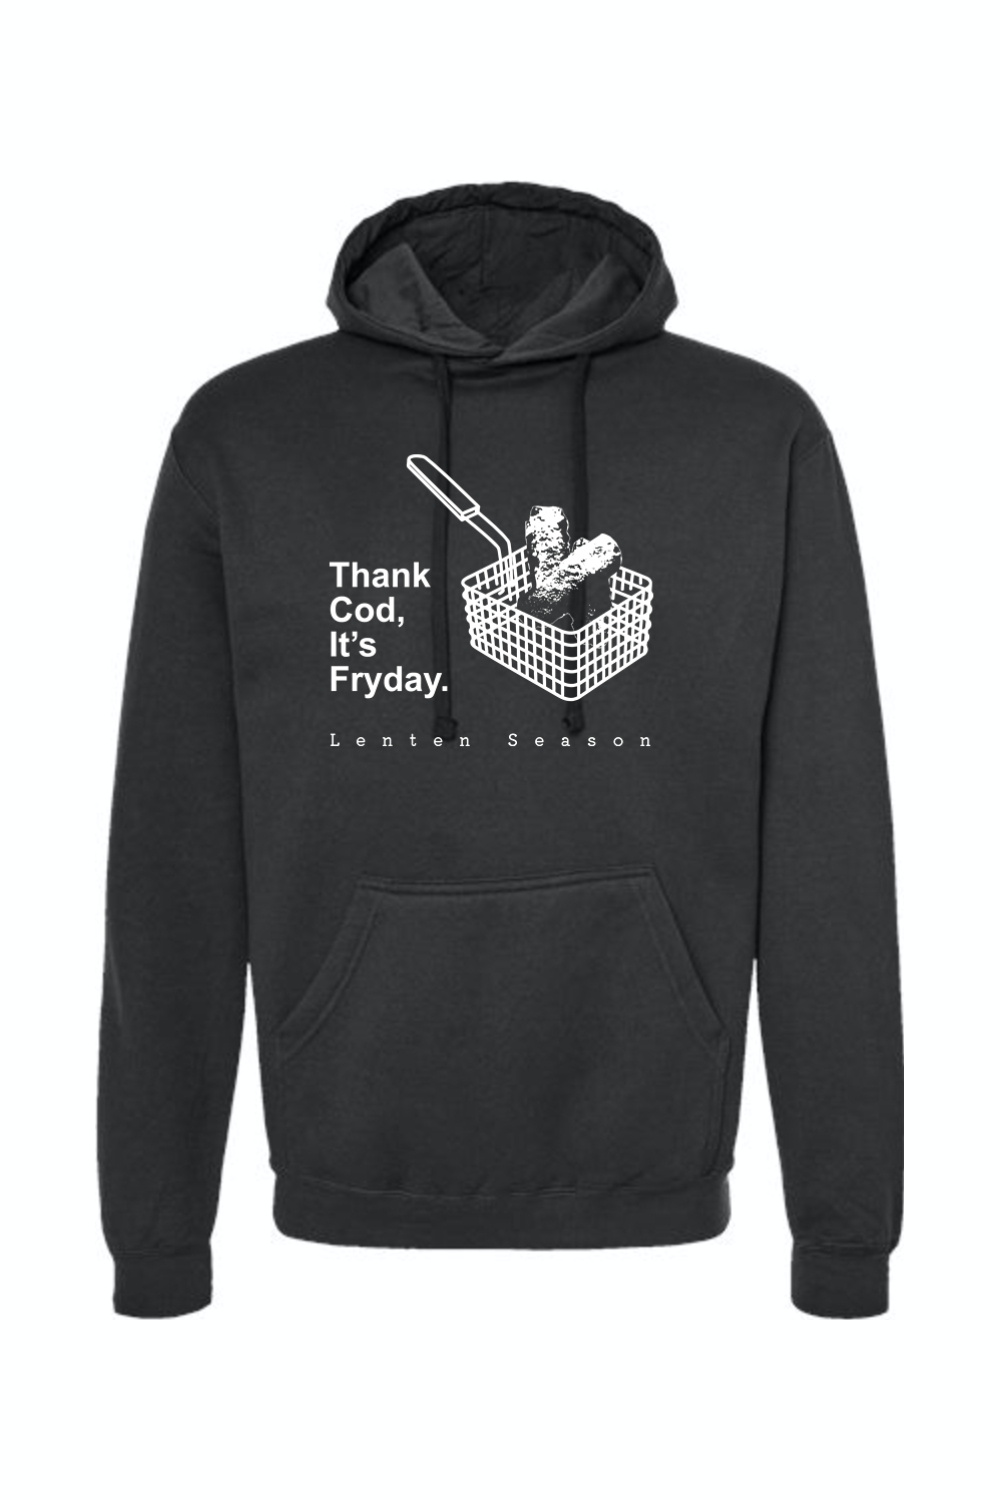 TCIF - Thank Cod, Its Fryday Fish Fry Hoodie Sweatshirt